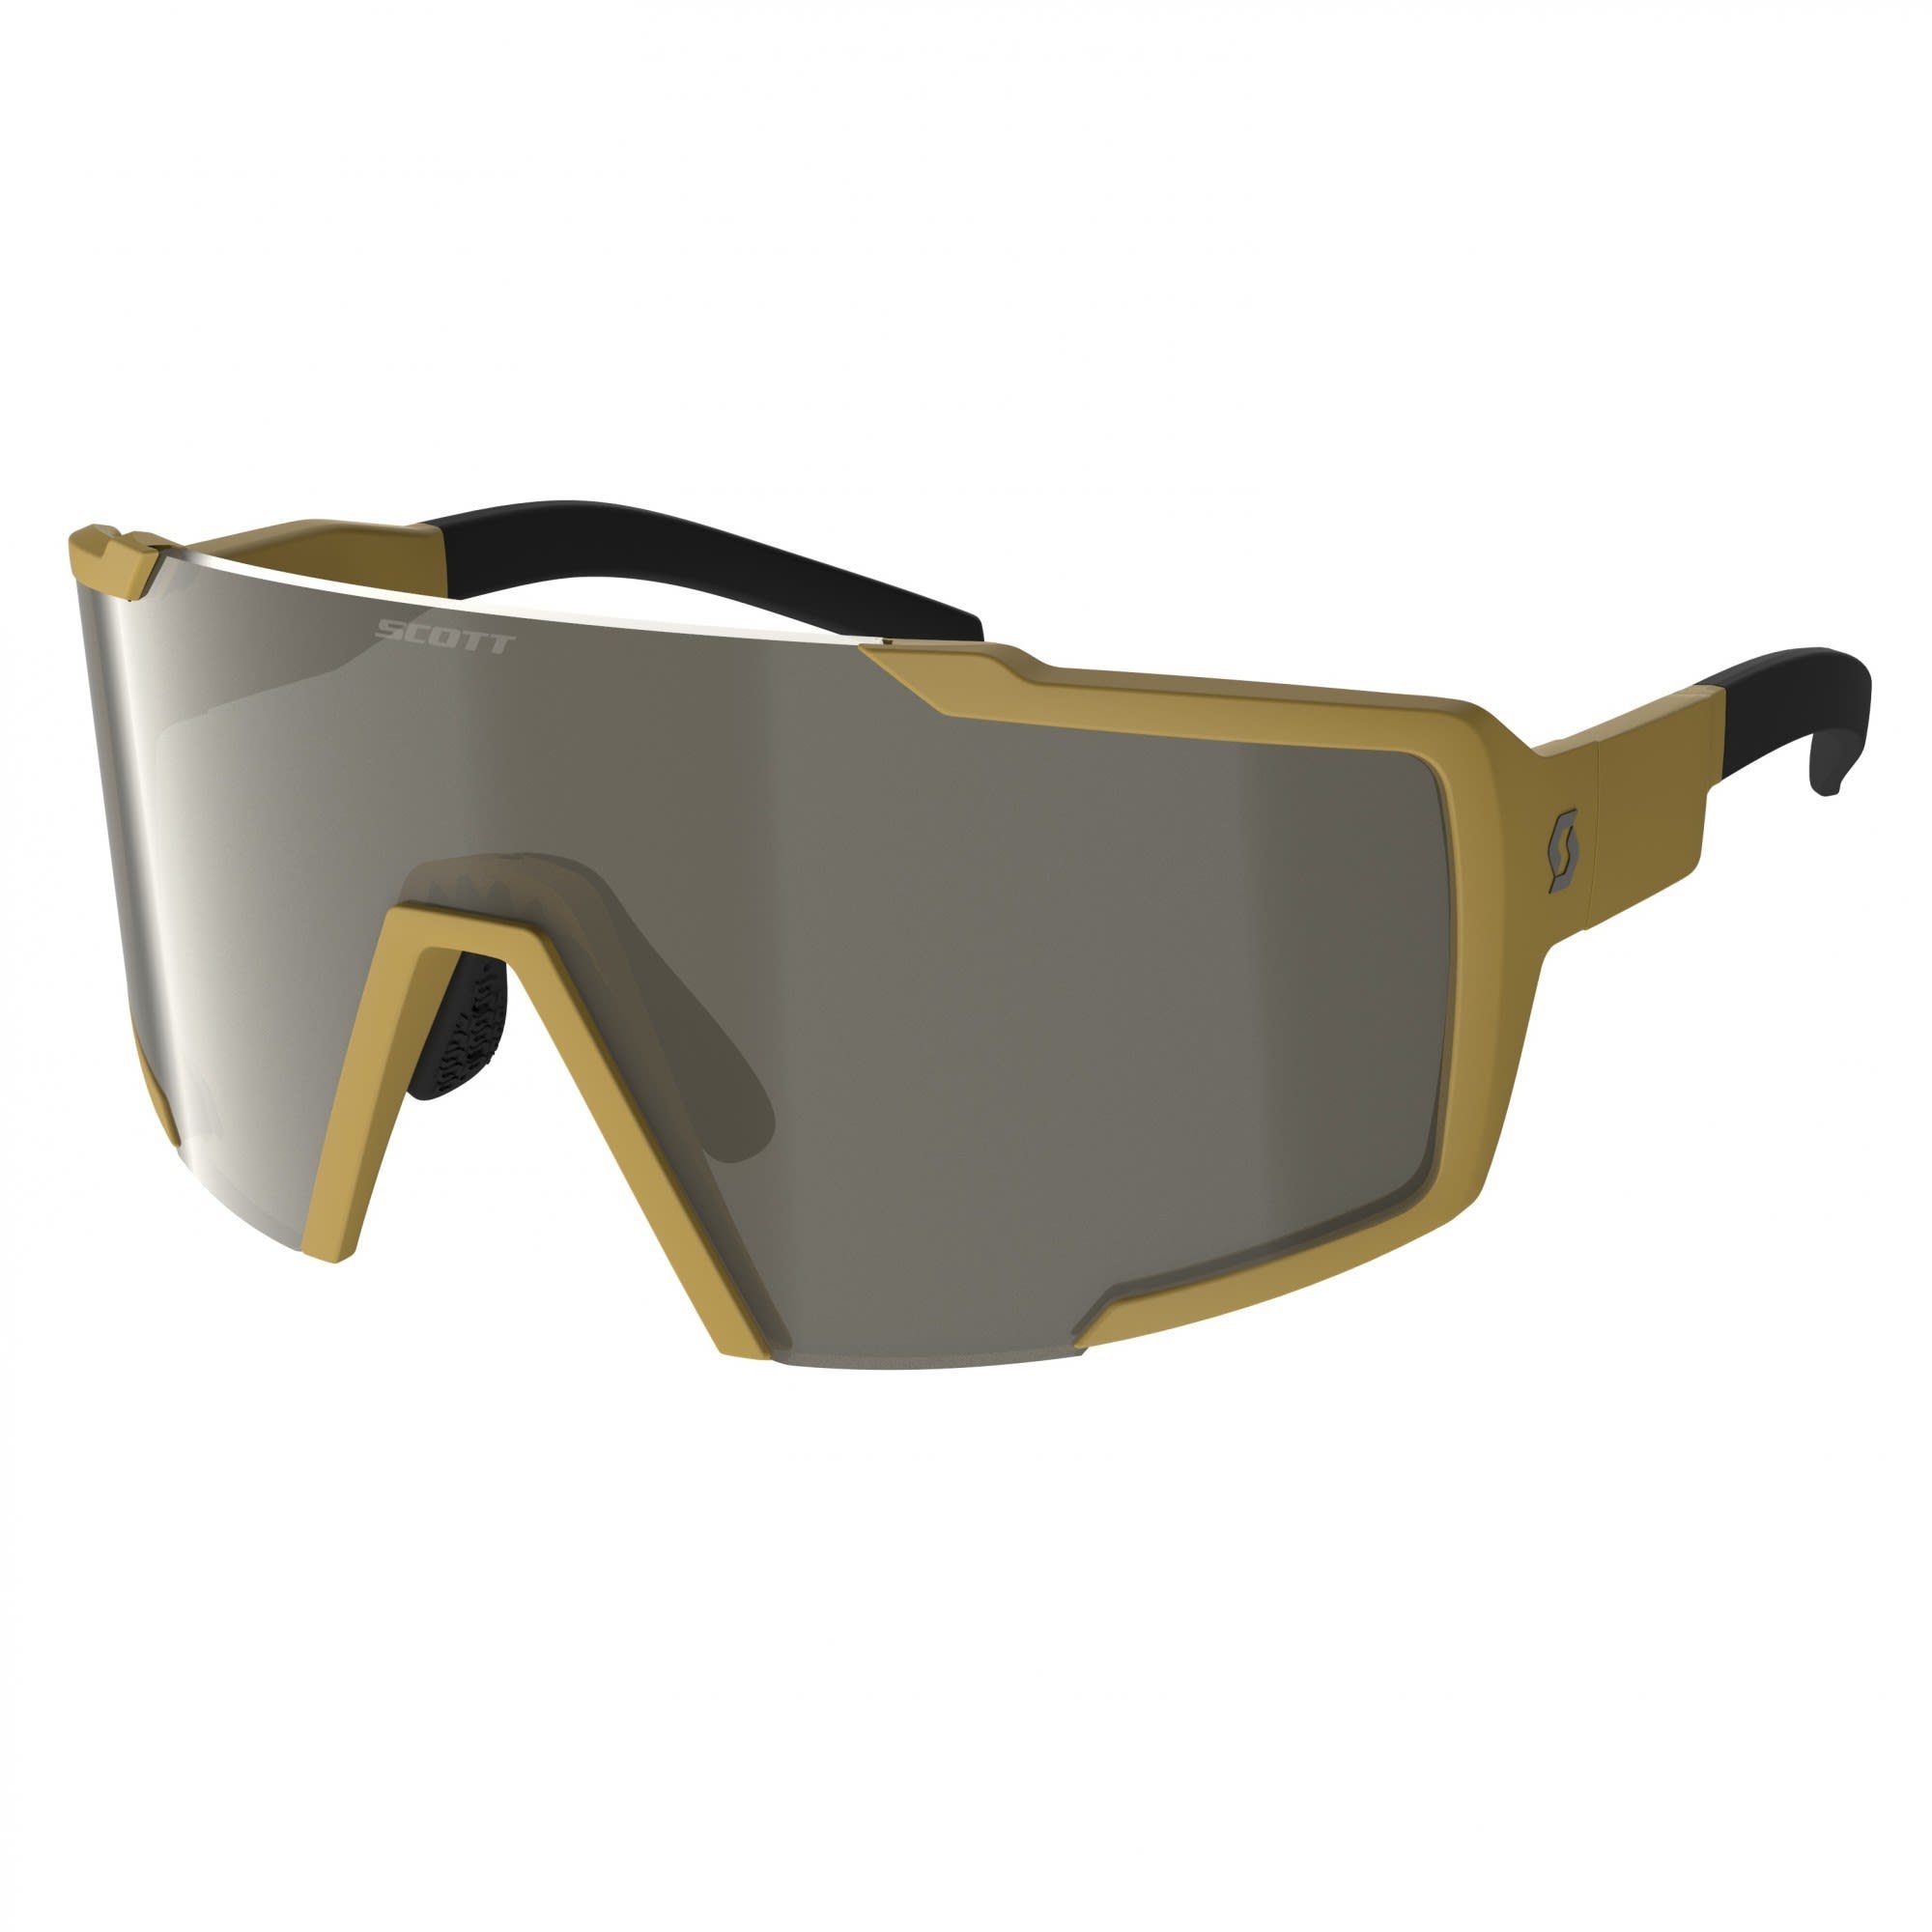 Scott Fahrradbrille Scott Shield Compact Sunglasses Accessoires Gold - Bronze Chrome | Fahrradbrillen